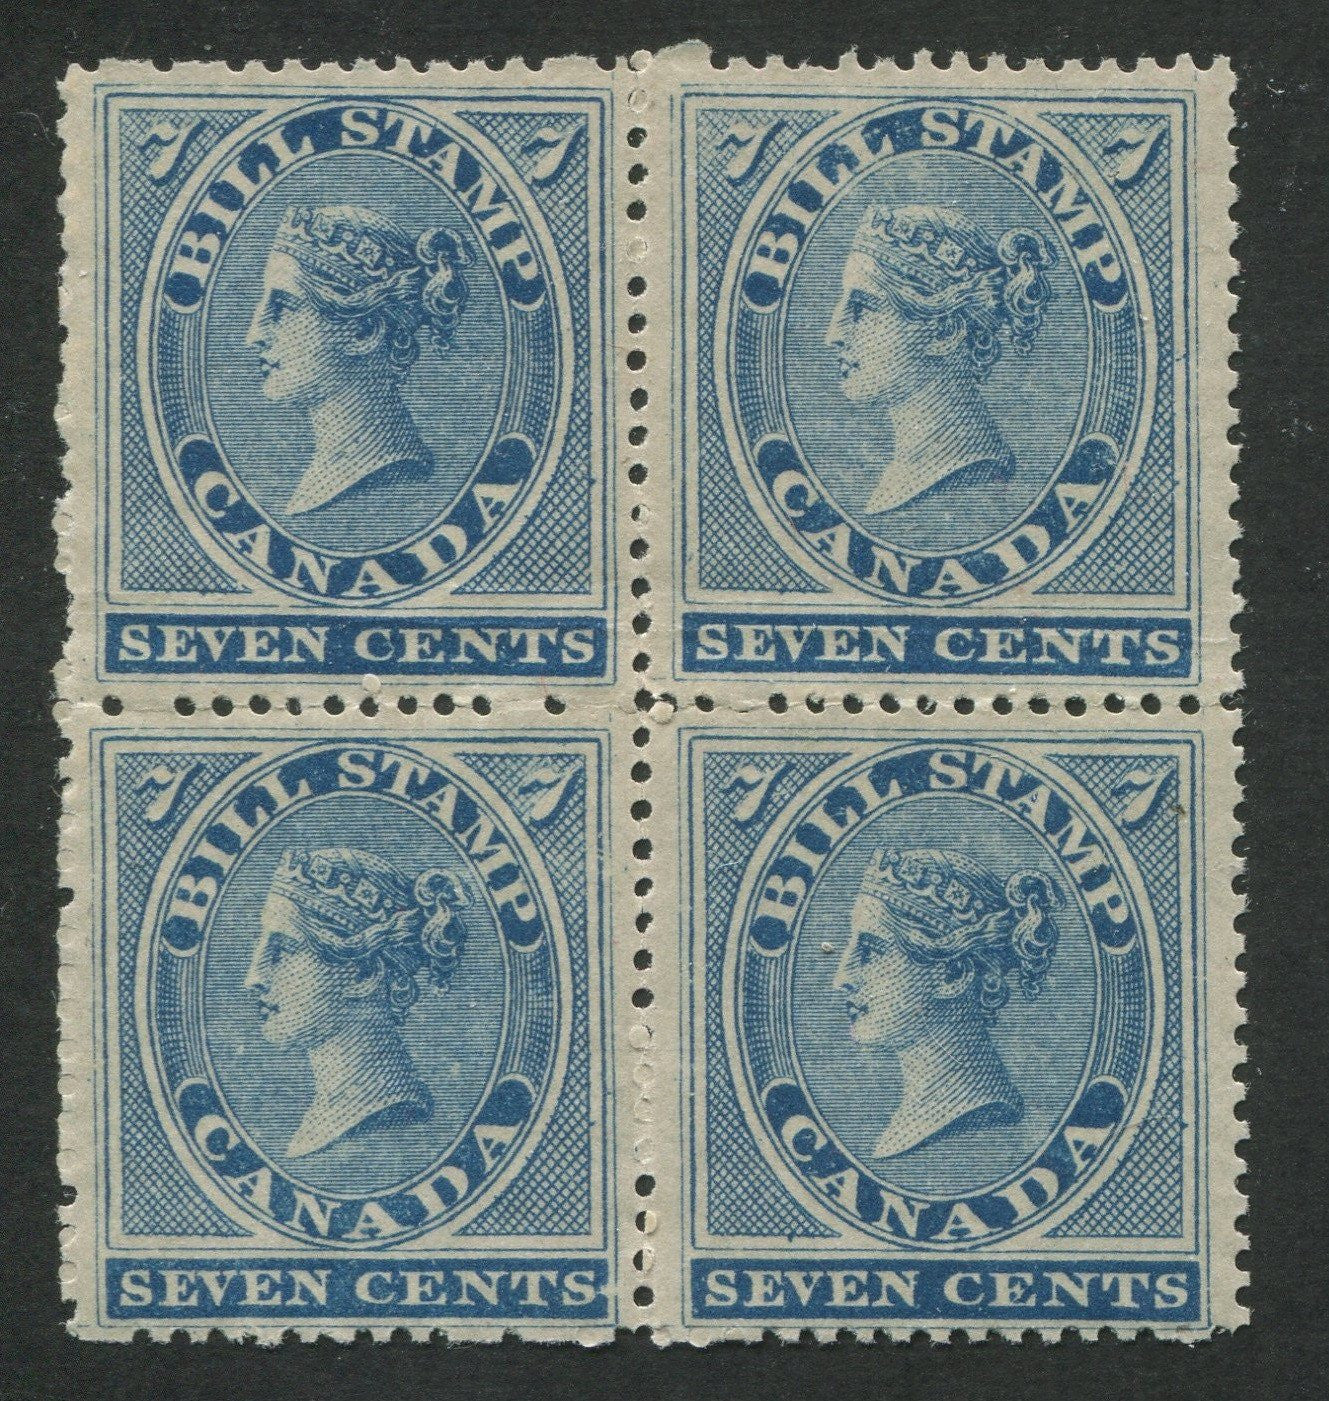 0007FB1707 - FB7 - Mint Block of 4 - Deveney Stamps Ltd. Canadian Stamps